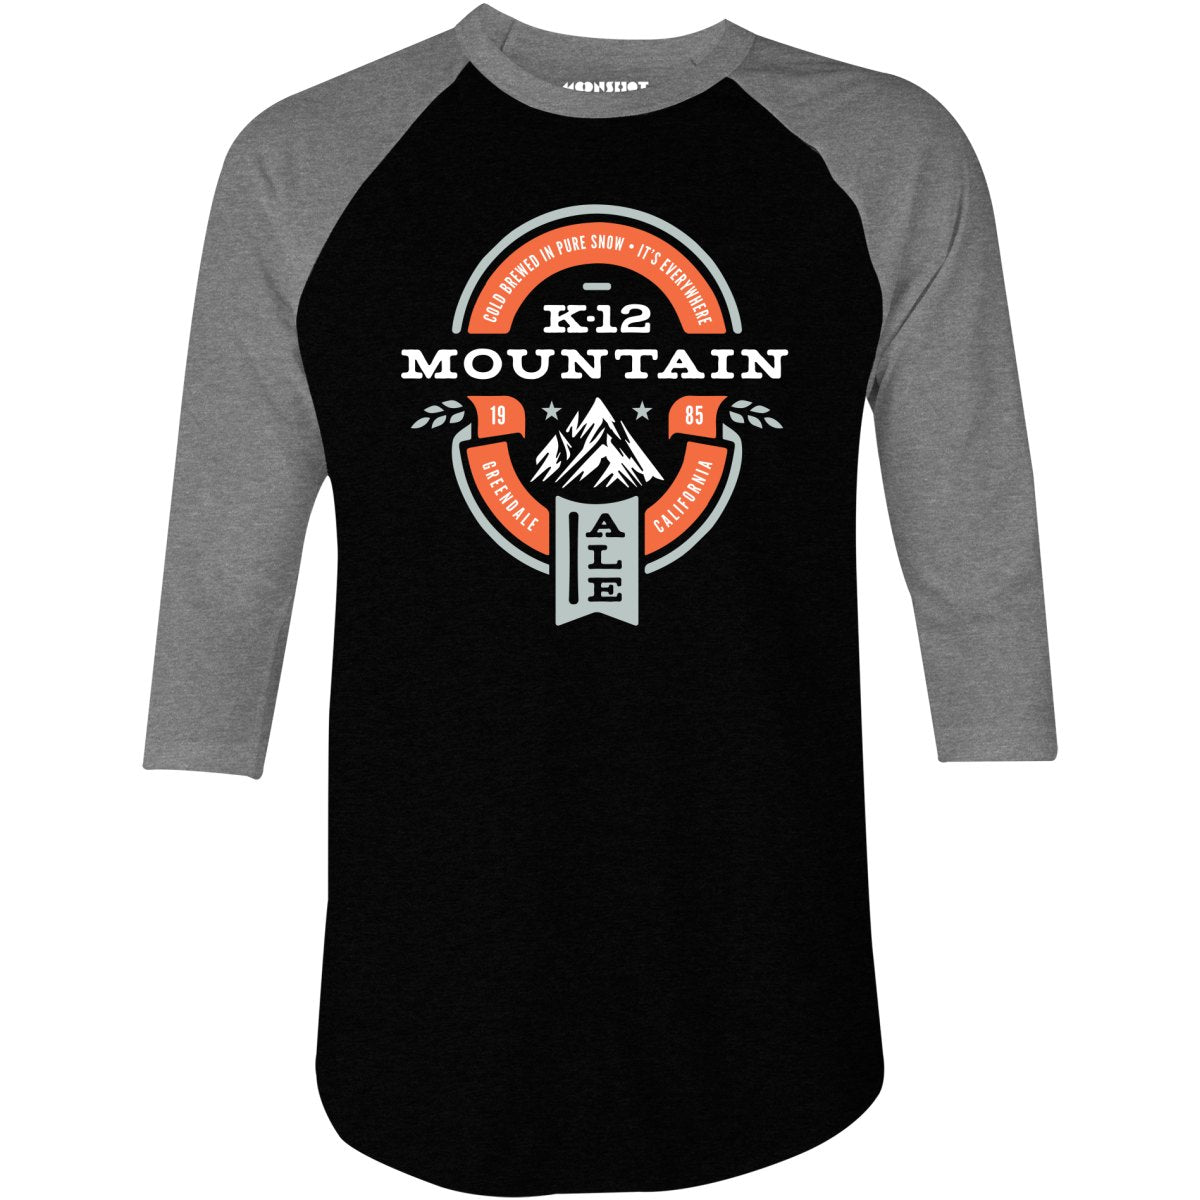 K-12 Mountain Ale - 3/4 Sleeve Raglan T-Shirt